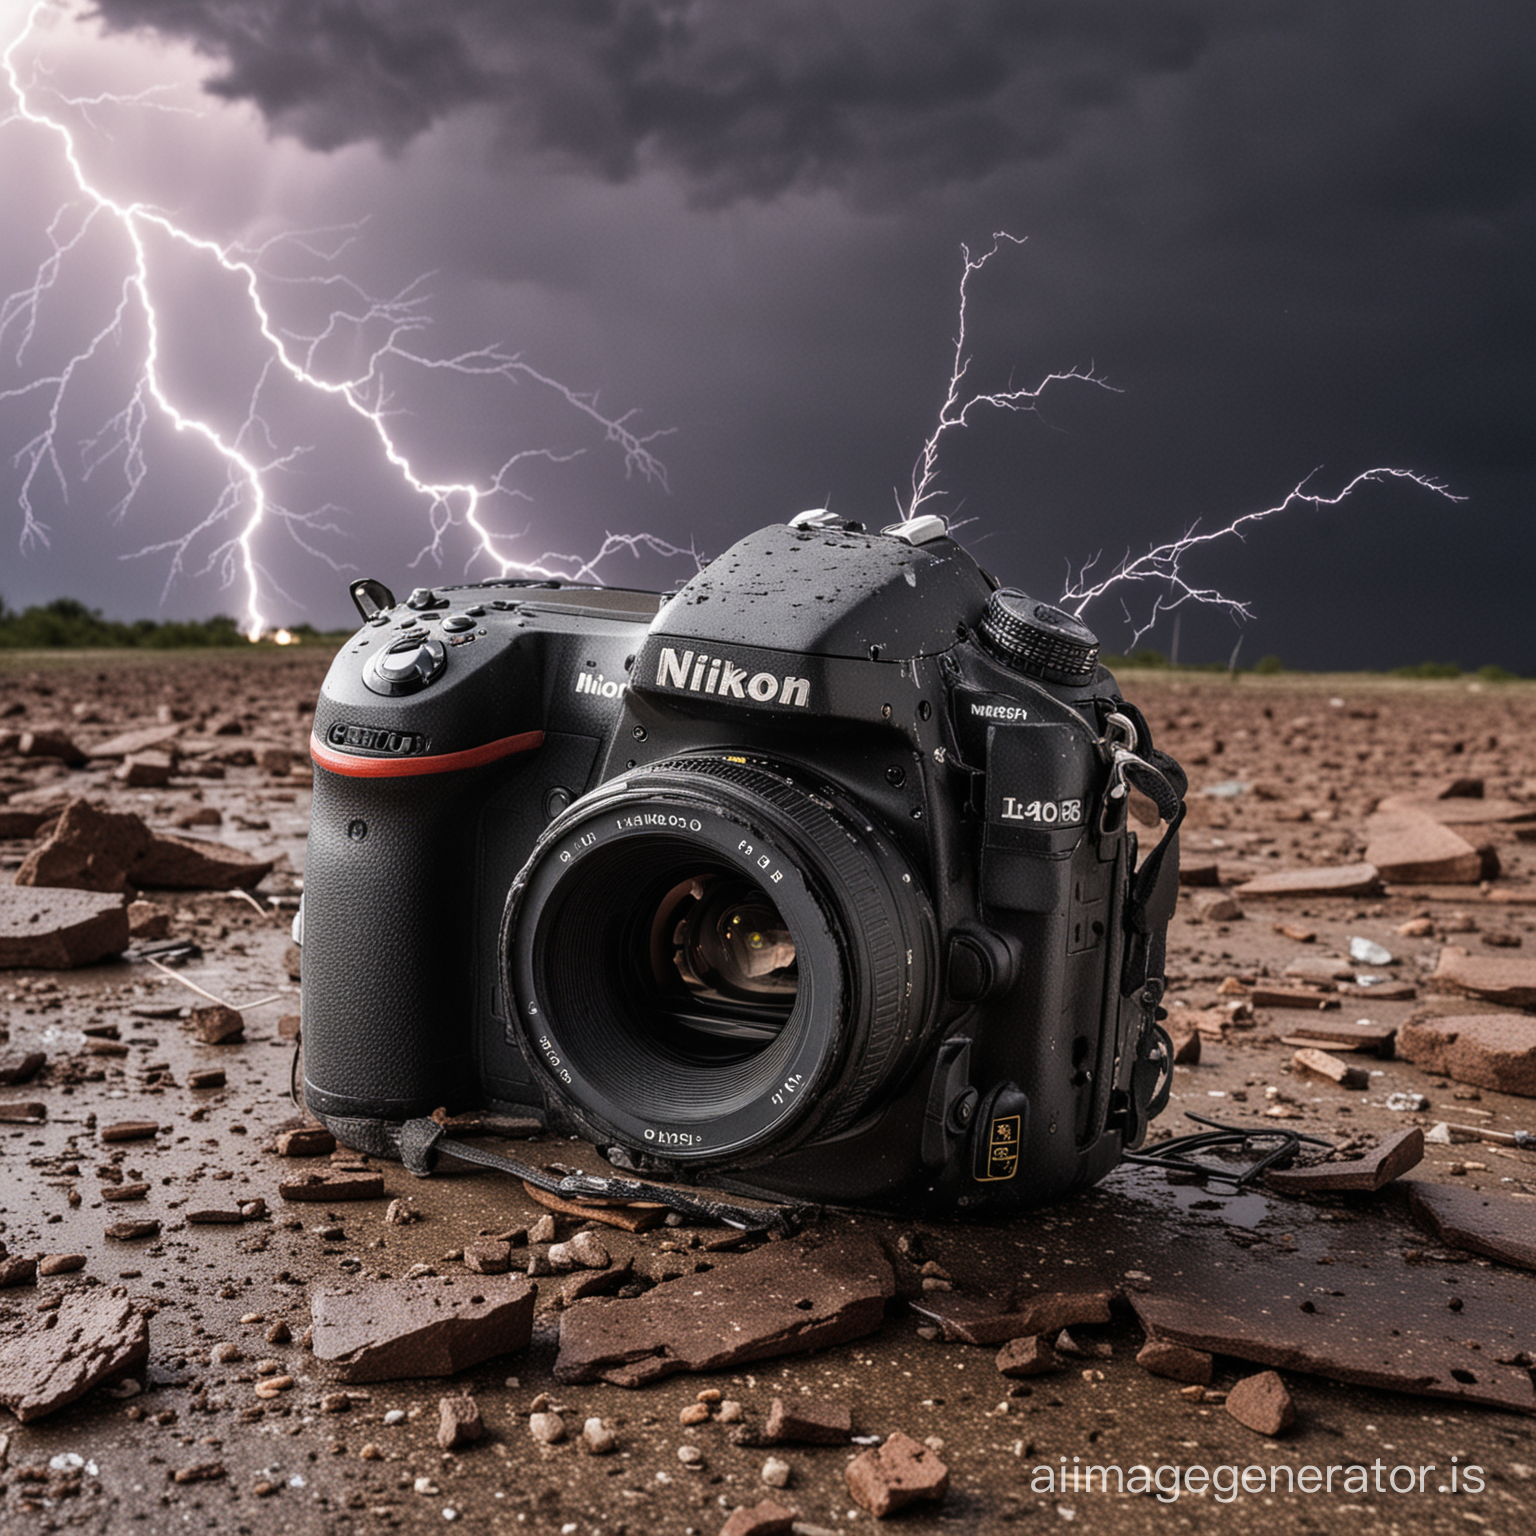 A Nikon camera destroyed by lightnings